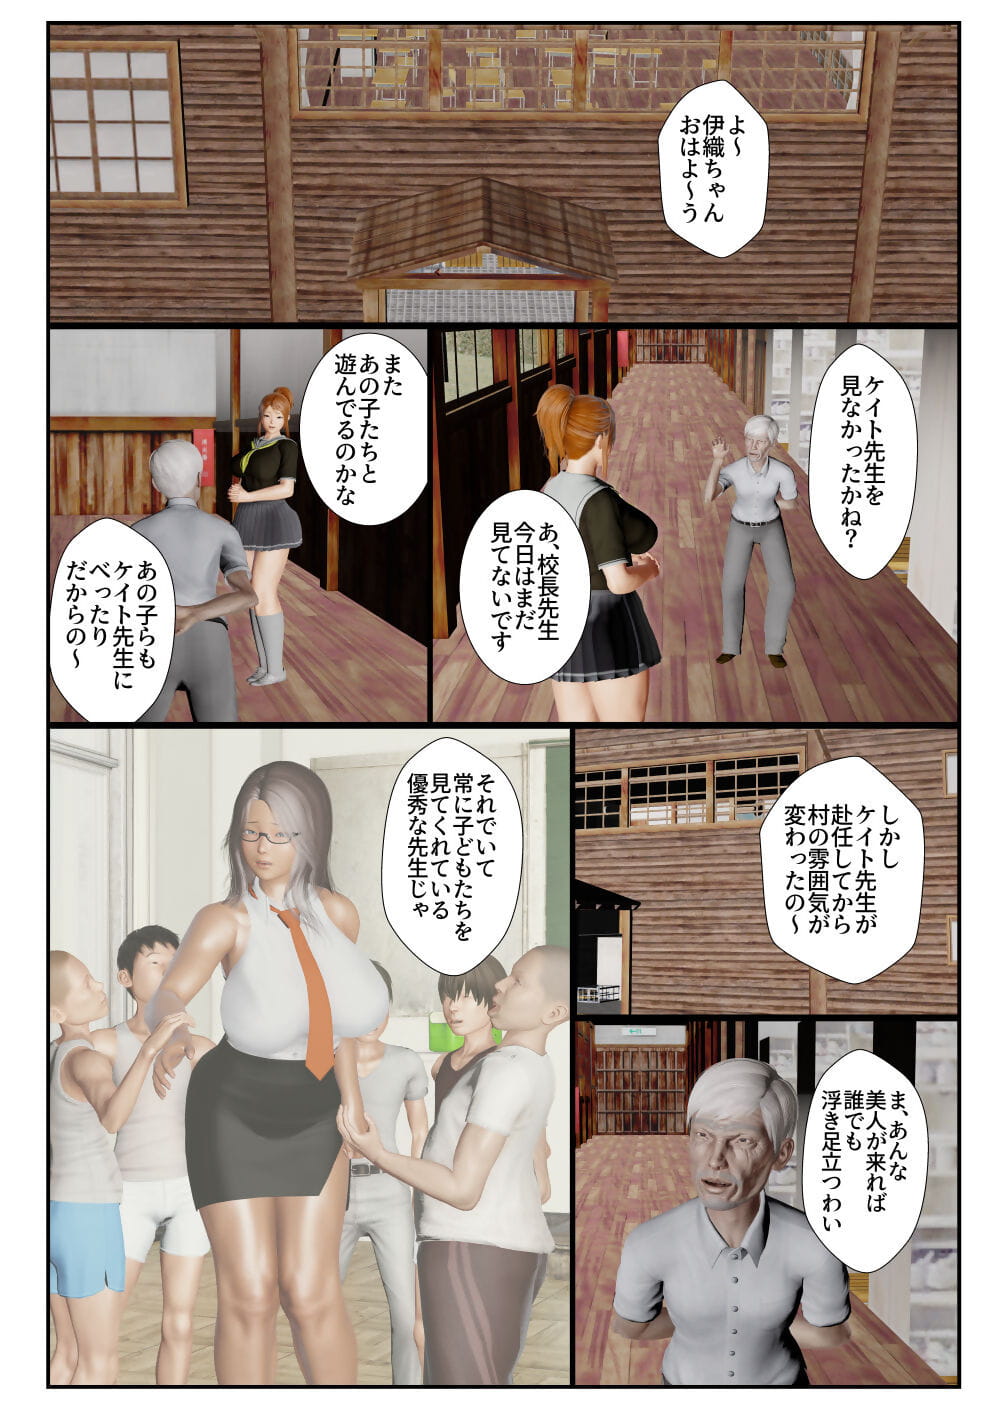 goriramu Touma kenshi Shirizu Demon Schwertkämpfer Serie Teil 4 page 1